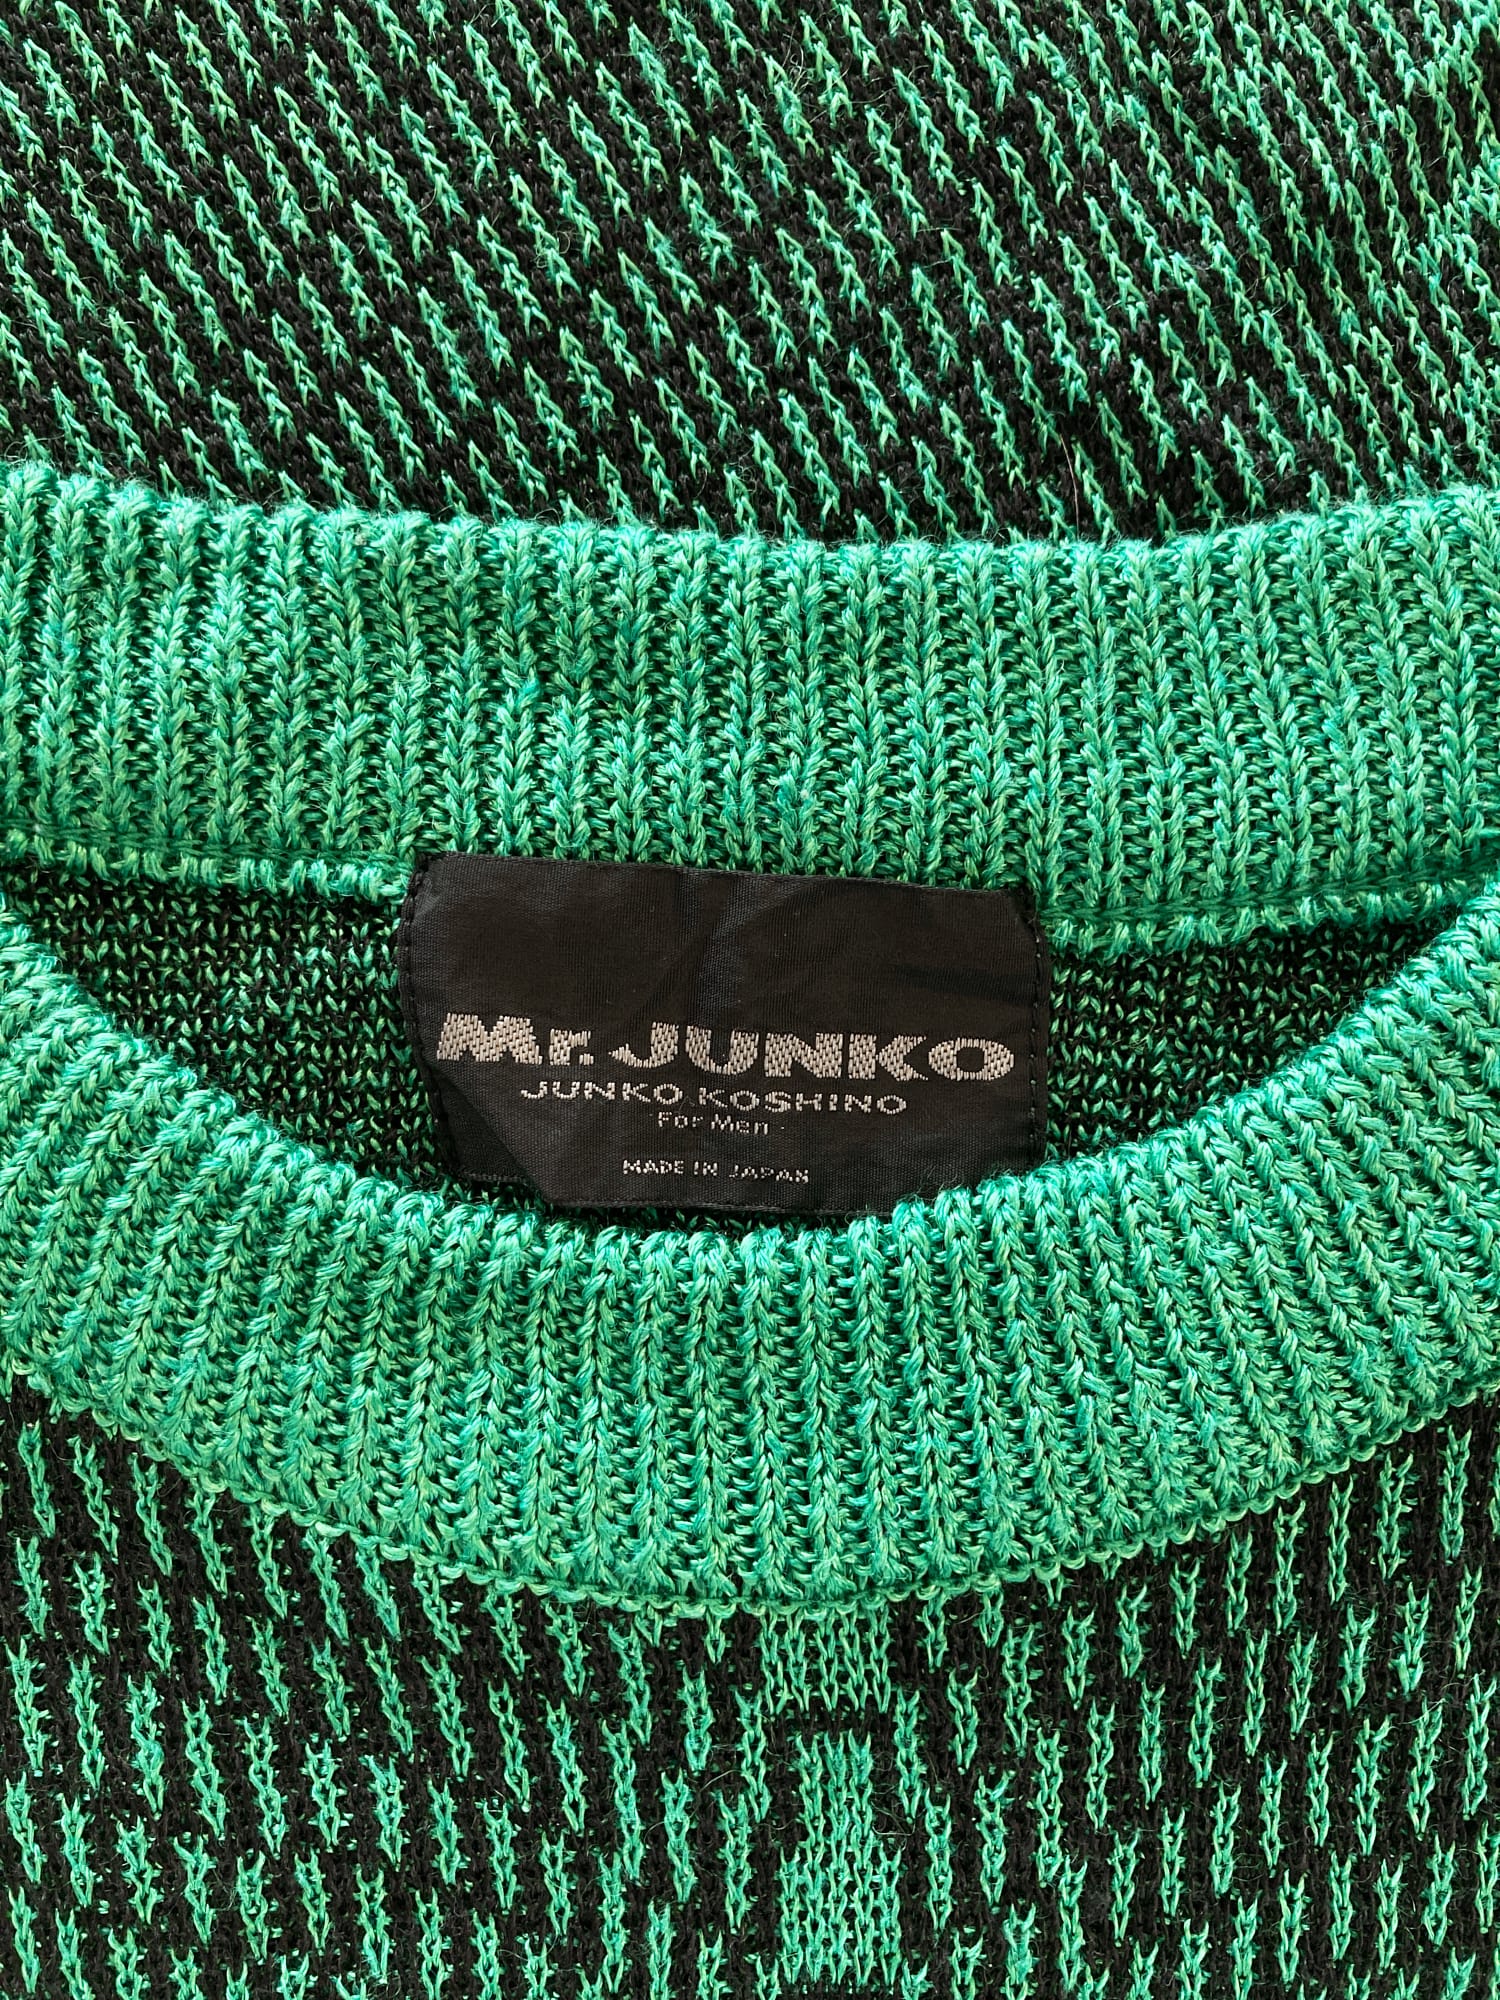 Mr Junko Junko Koshino 1990s lightweight patterned green and black jumper